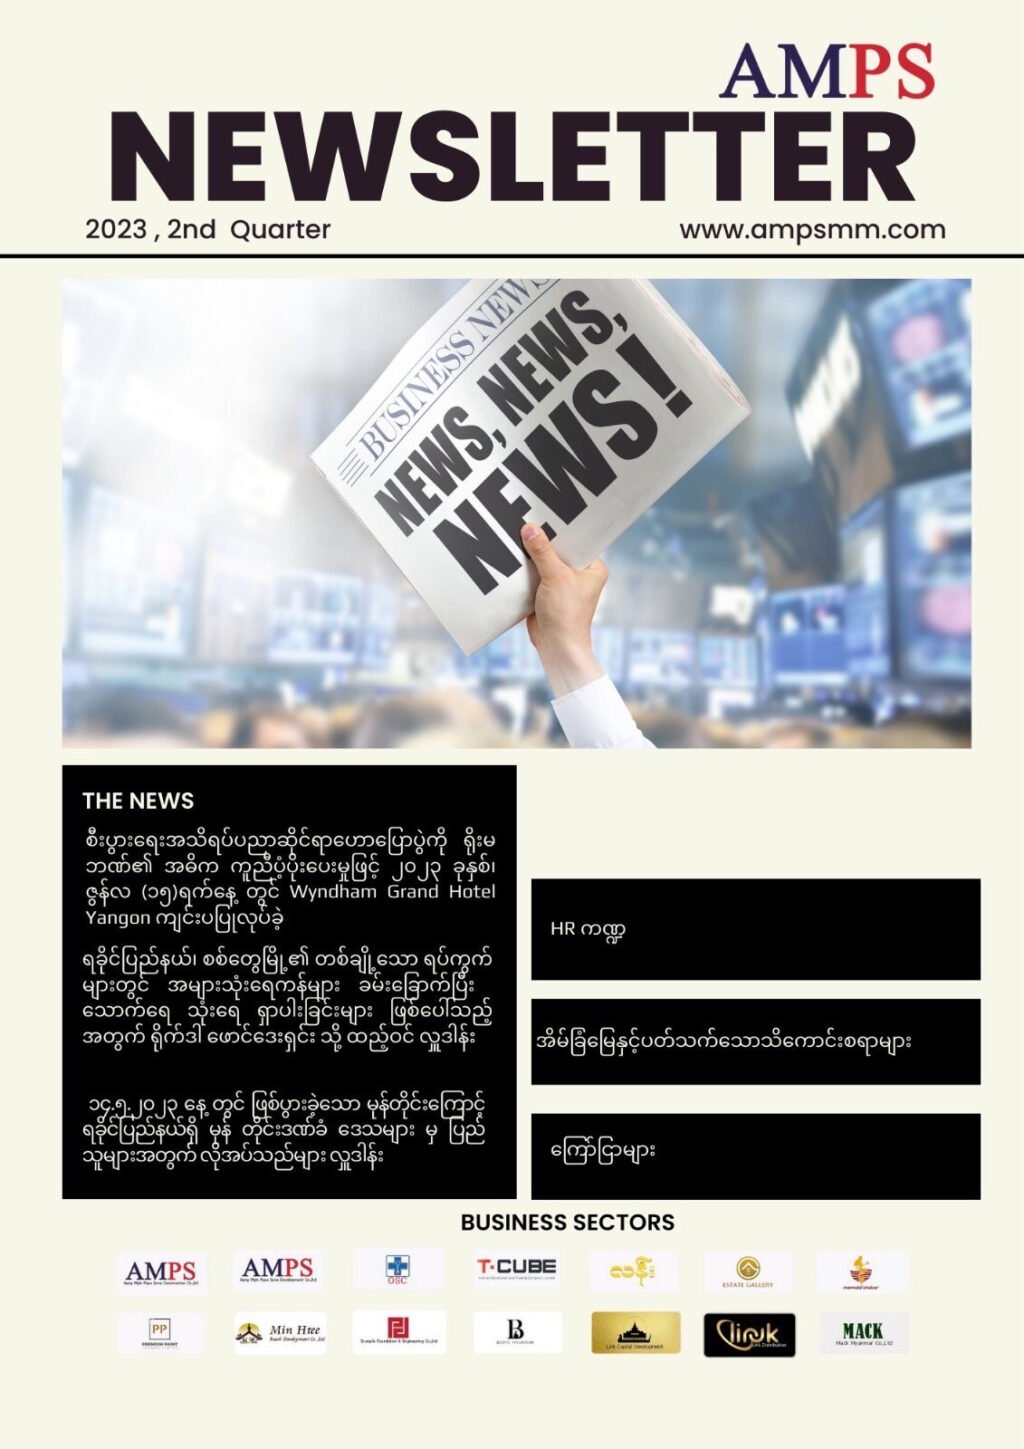 Newsletters (2nd Quarter) For 2023